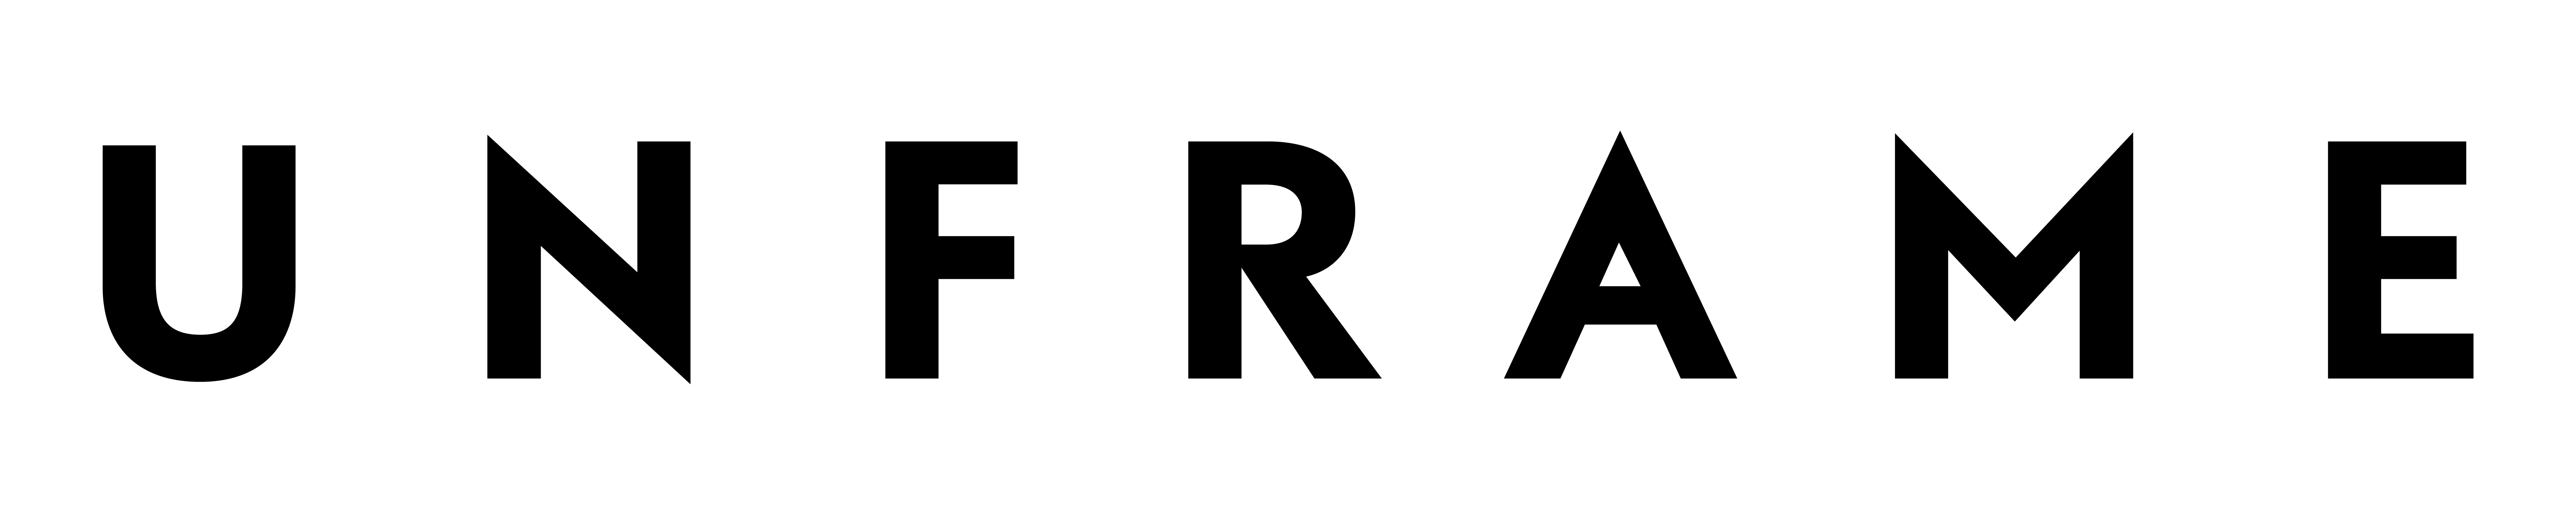 Unframe Logo